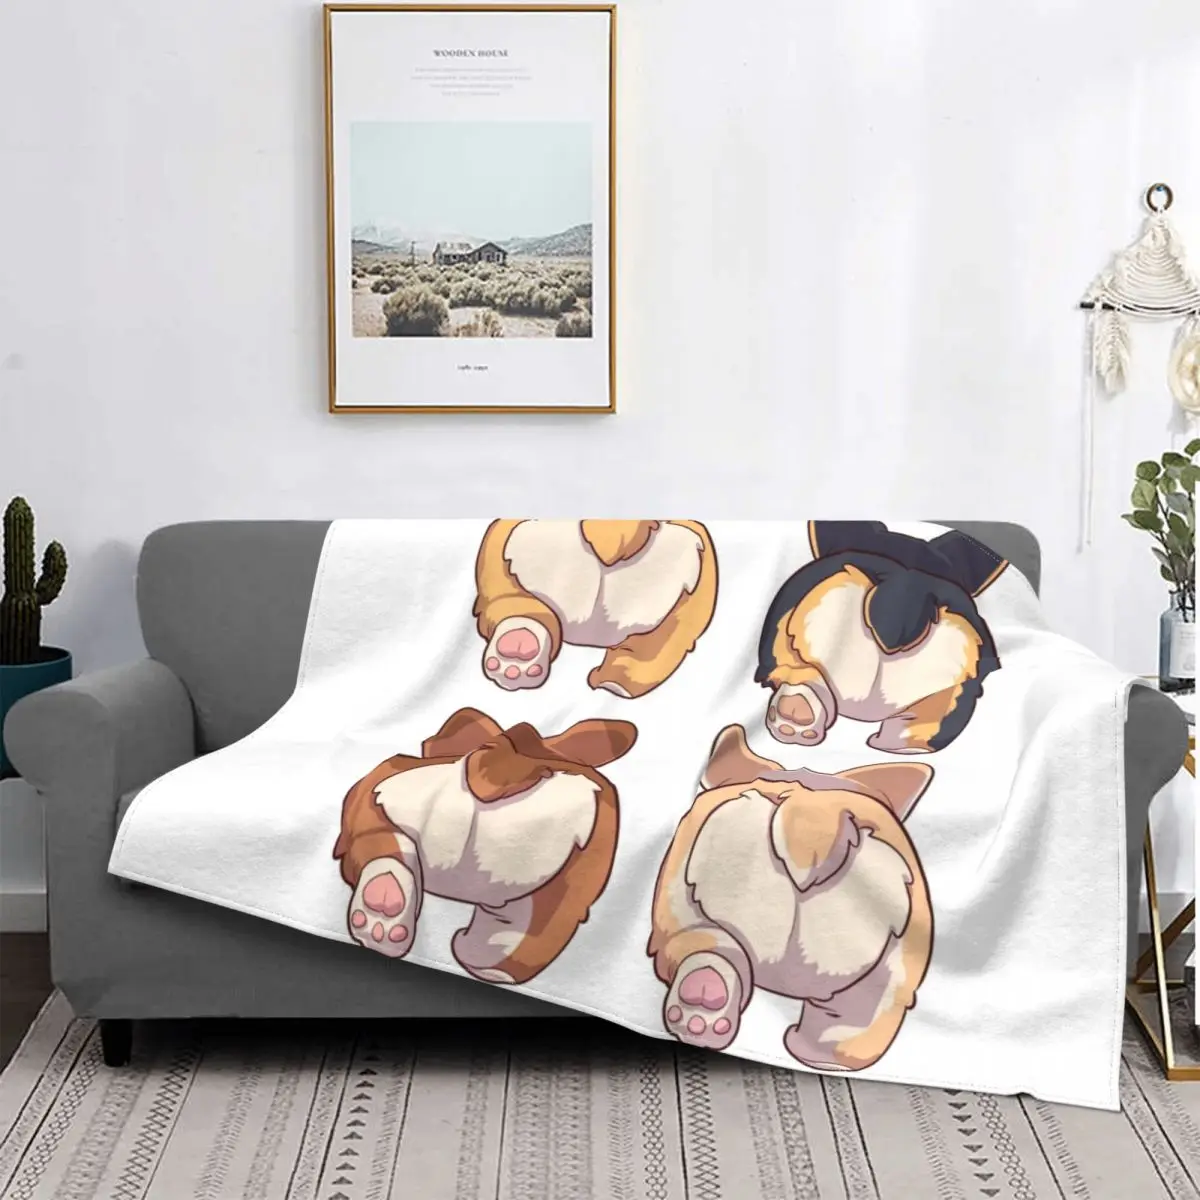 Corgi Bottom Fashion Blanket Dog Pet Puppy Animal Plush Thick UltraSoft Flannel Fleece Throw Blanket For Bedding Bedspread Cover